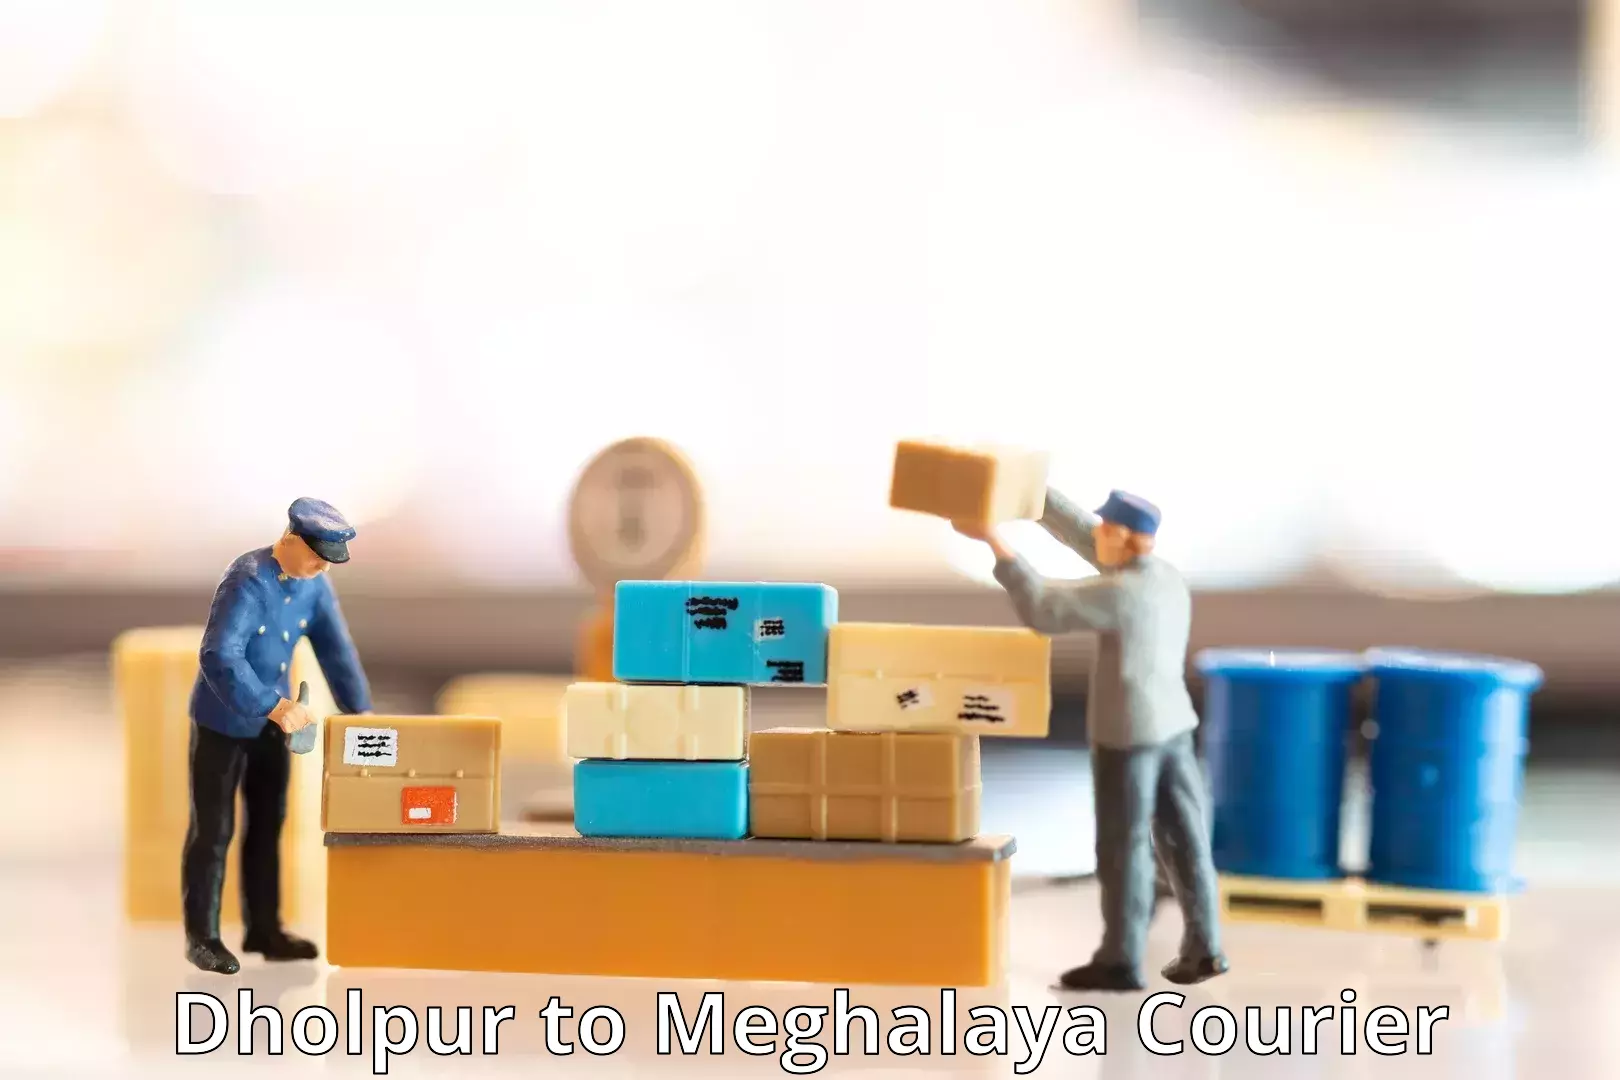 Logistics service provider Dholpur to Shillong